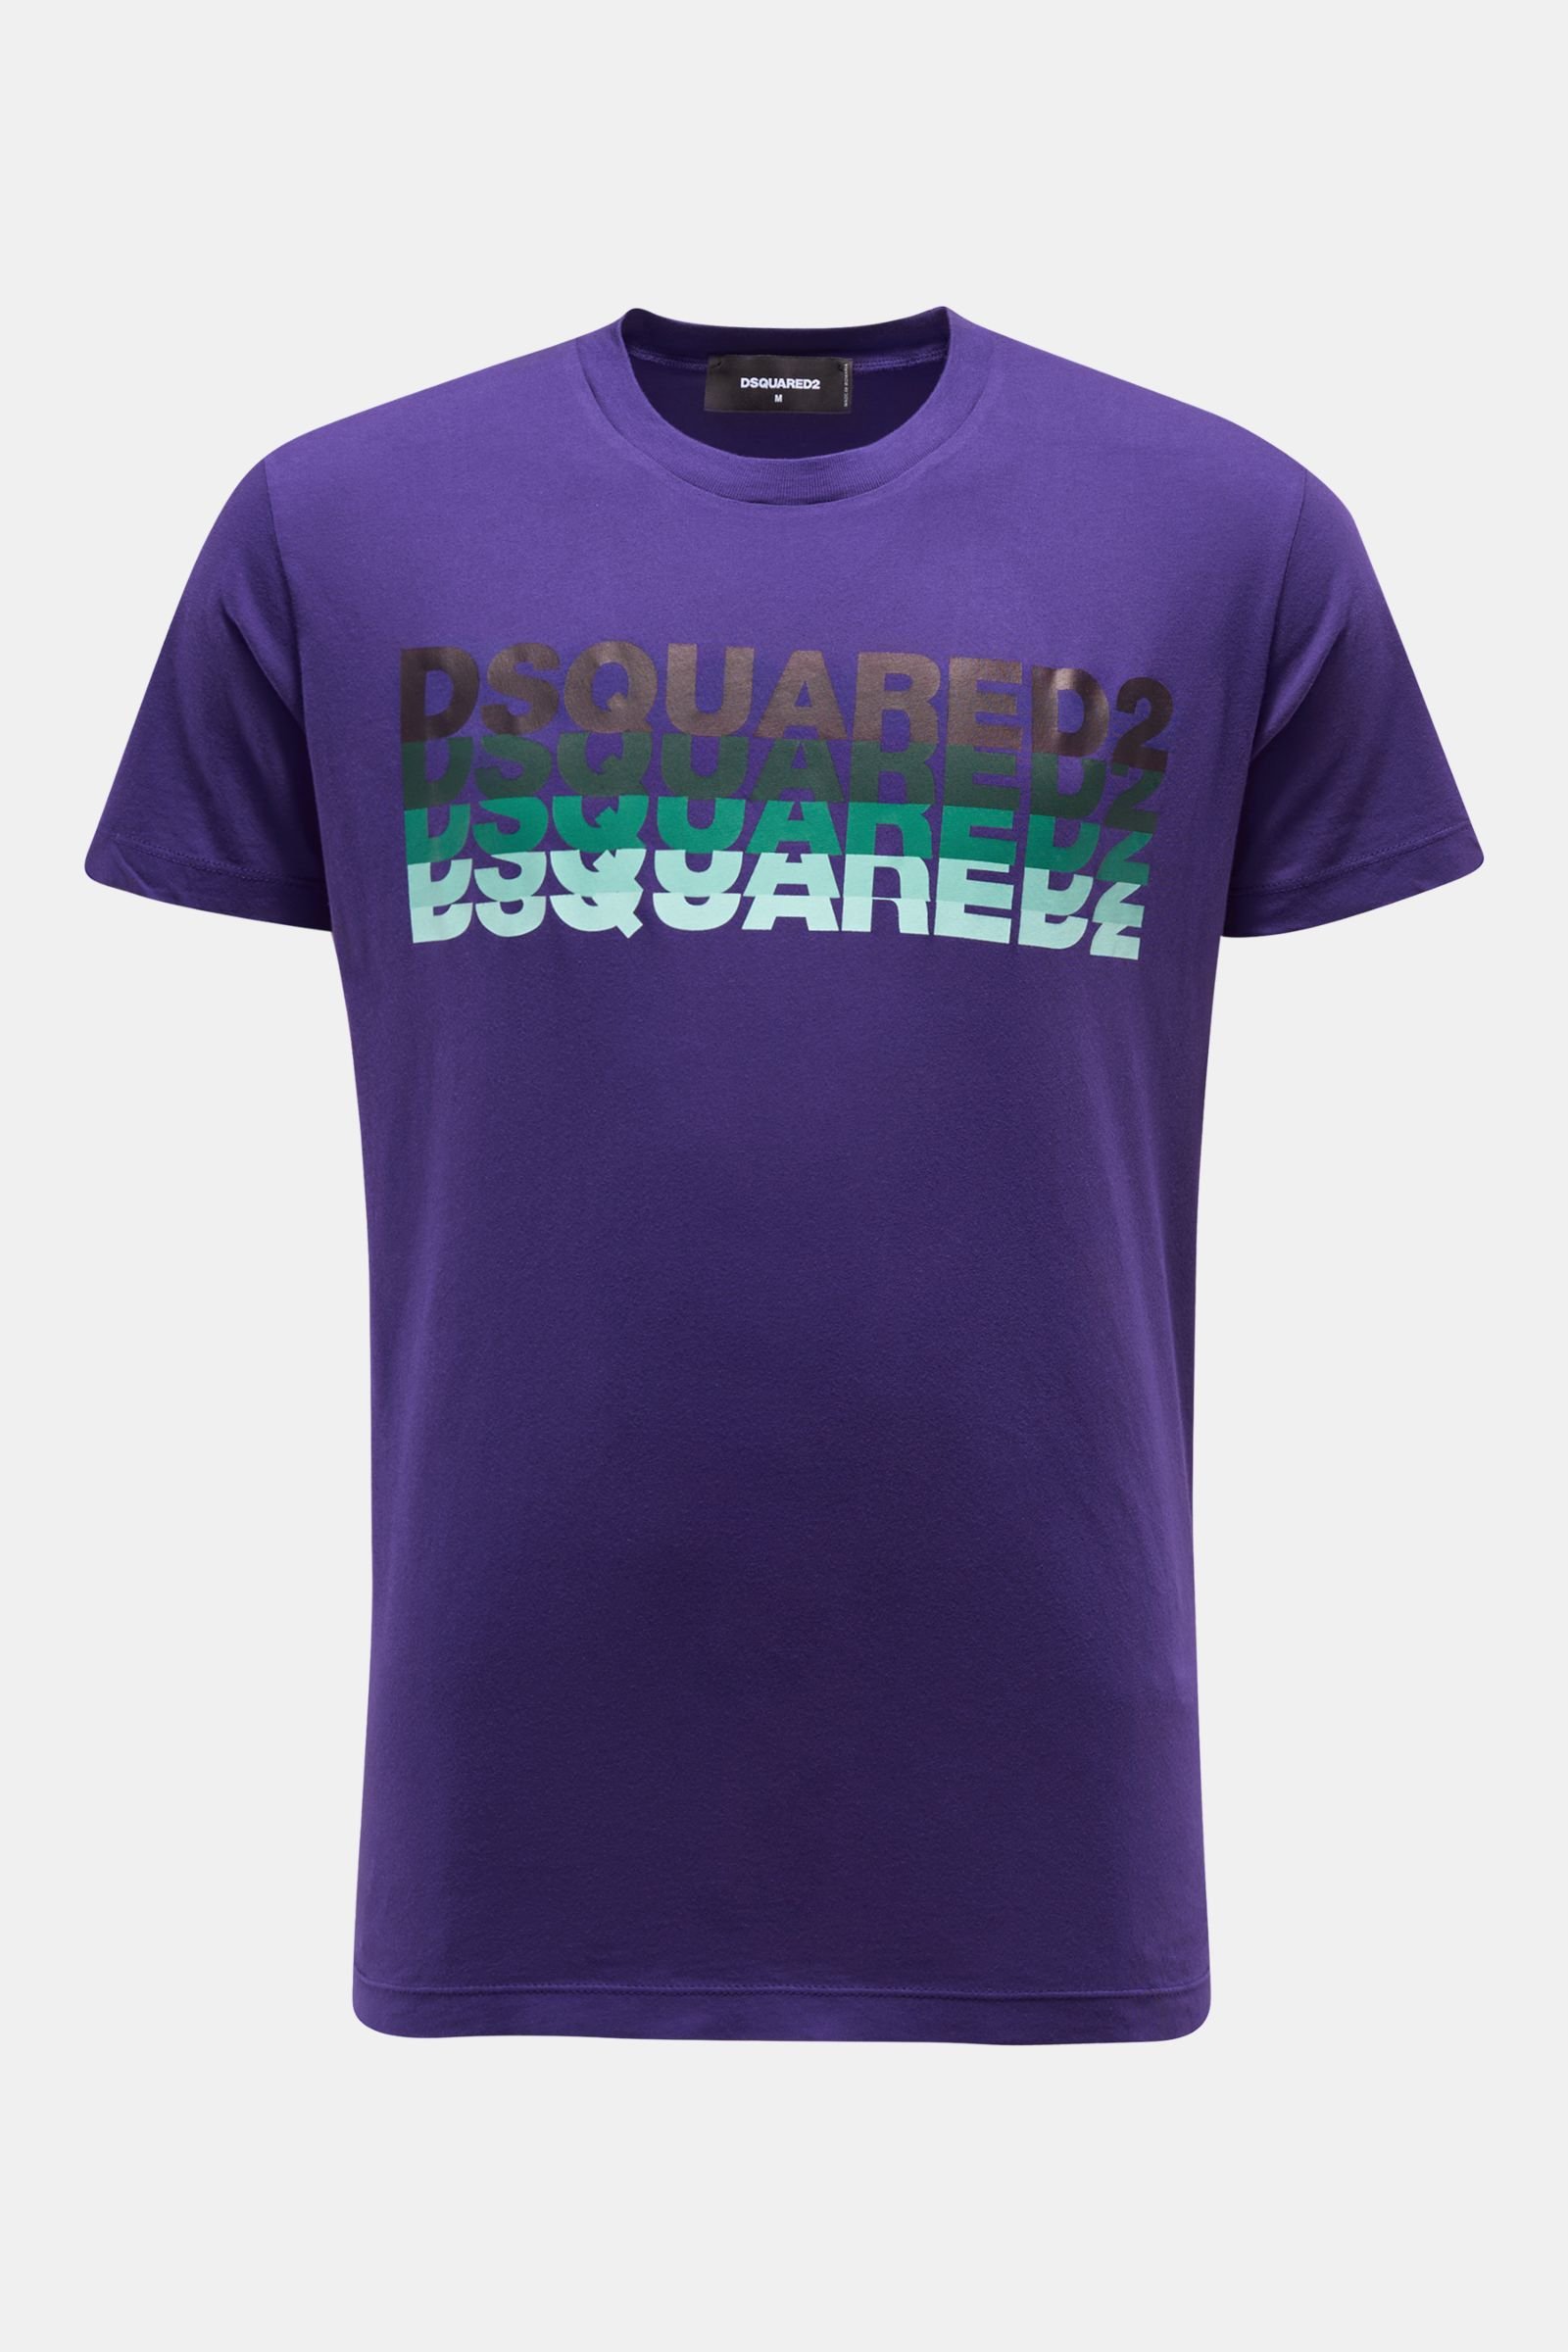 Crew neck T-shirt purple